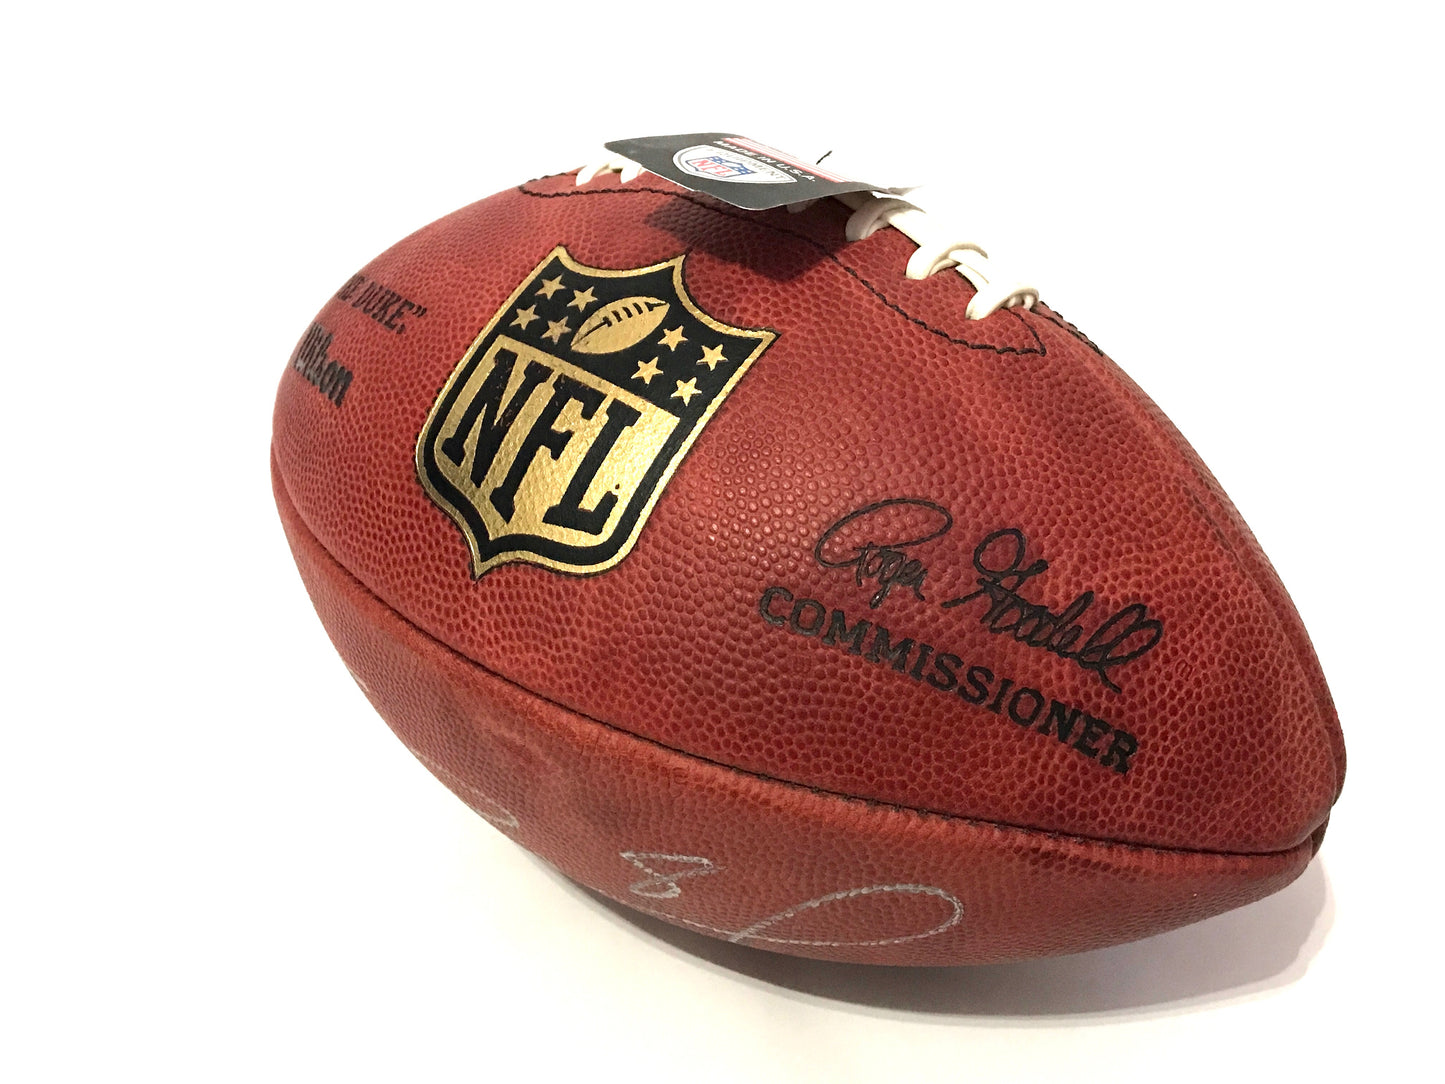 Signed Official NFL Game Ball by Heisman Trophy Winner Sam Bradford Football